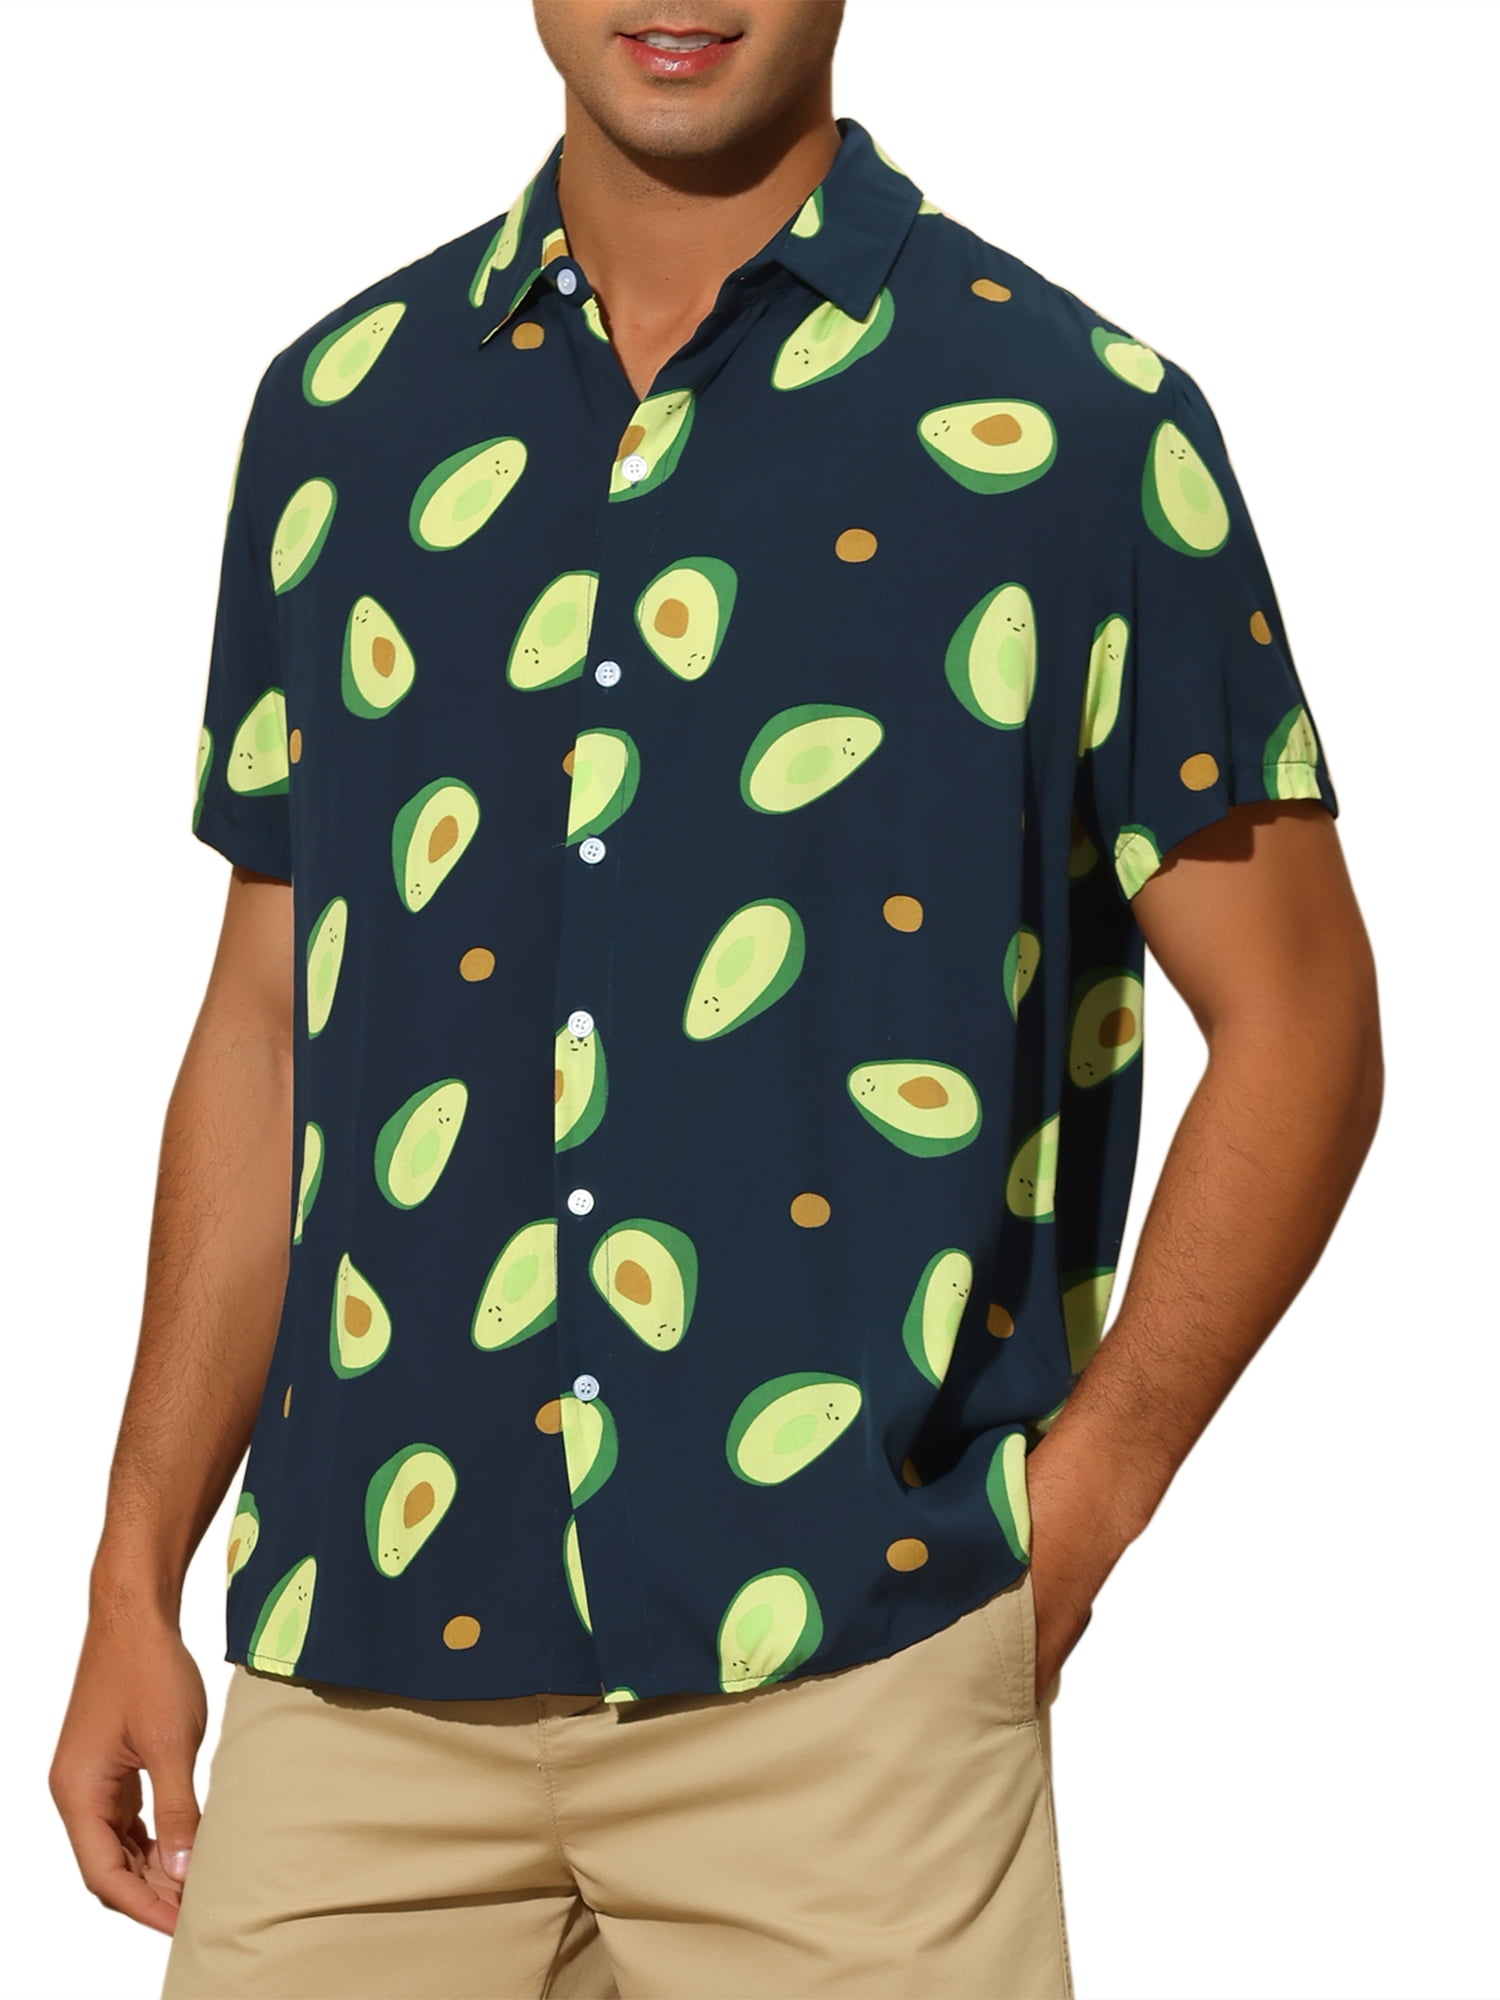 Trivento Amado Sur Summer Aloha Button Up Hawaiian Shirt Gift For